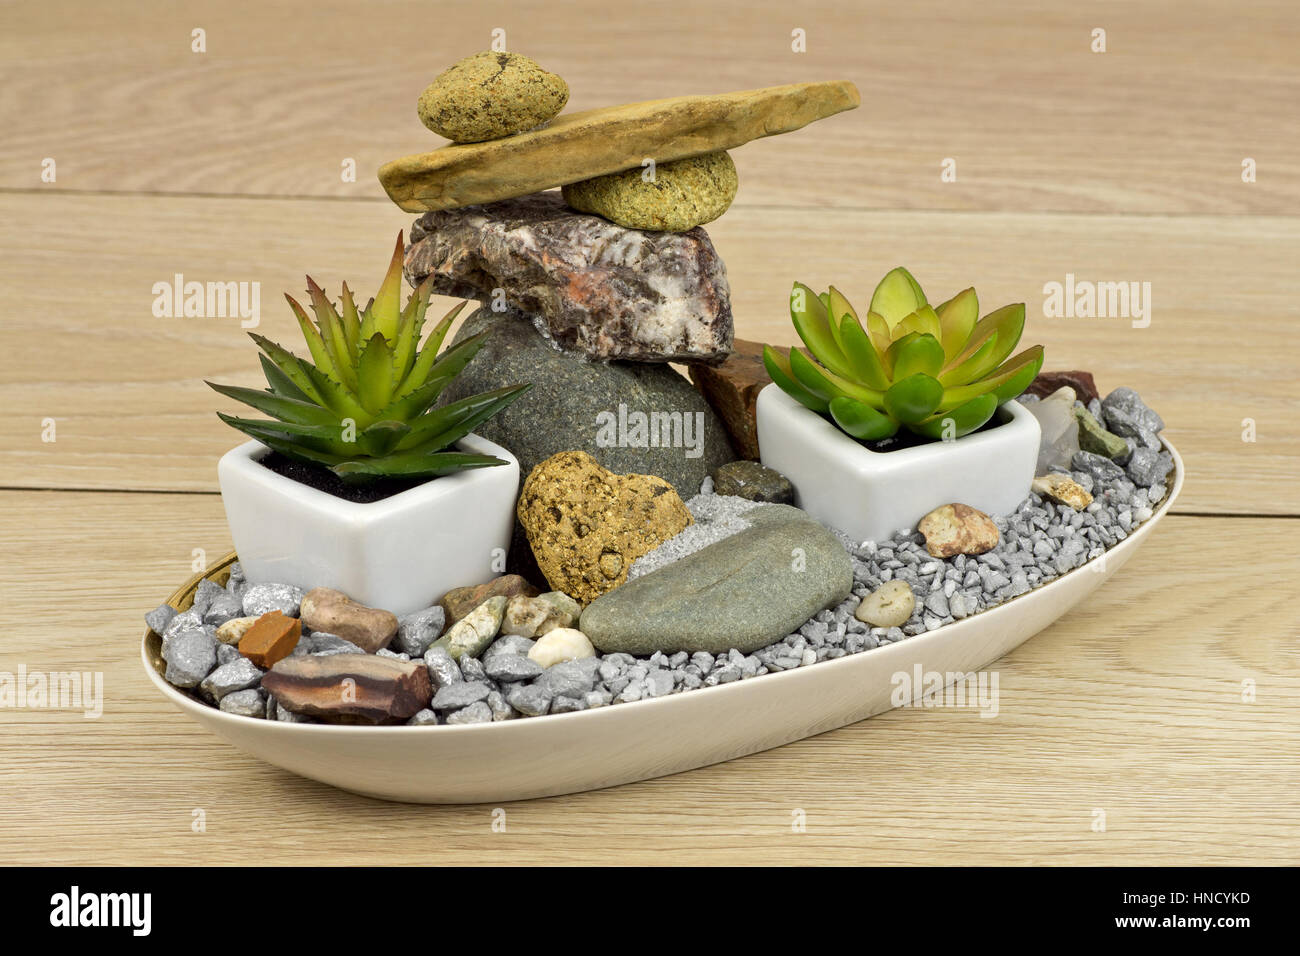 Mini-garden with balanced stones Stock Photo